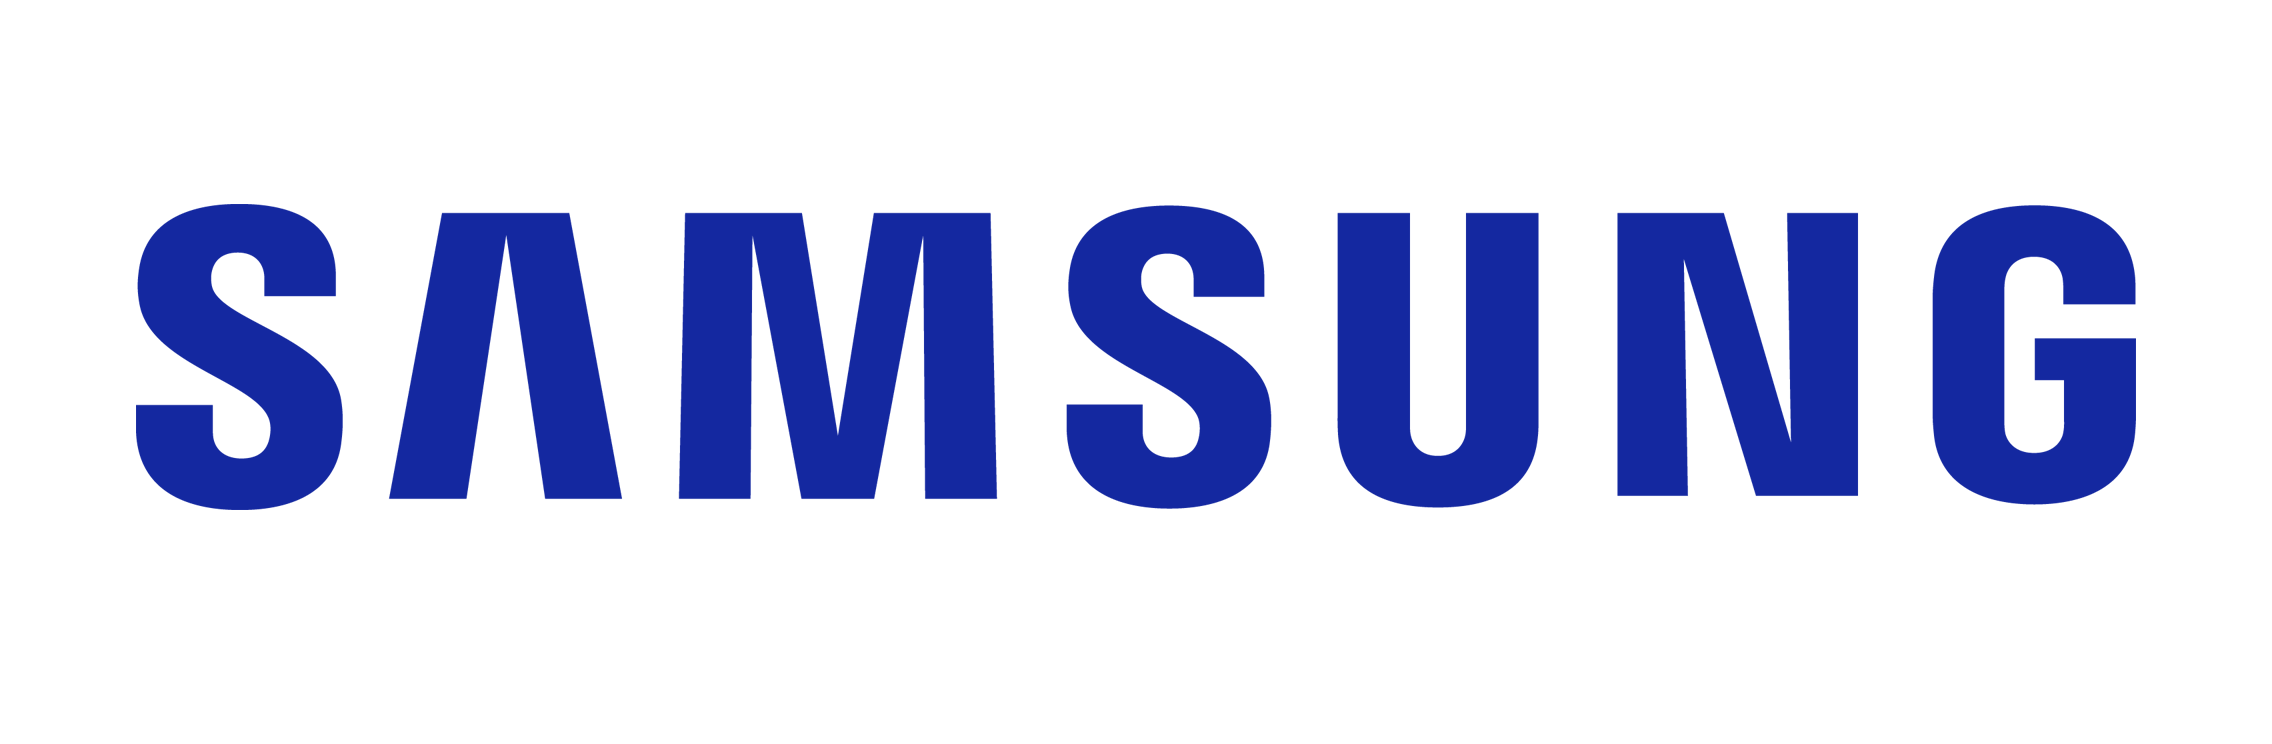 Logo - Samsung